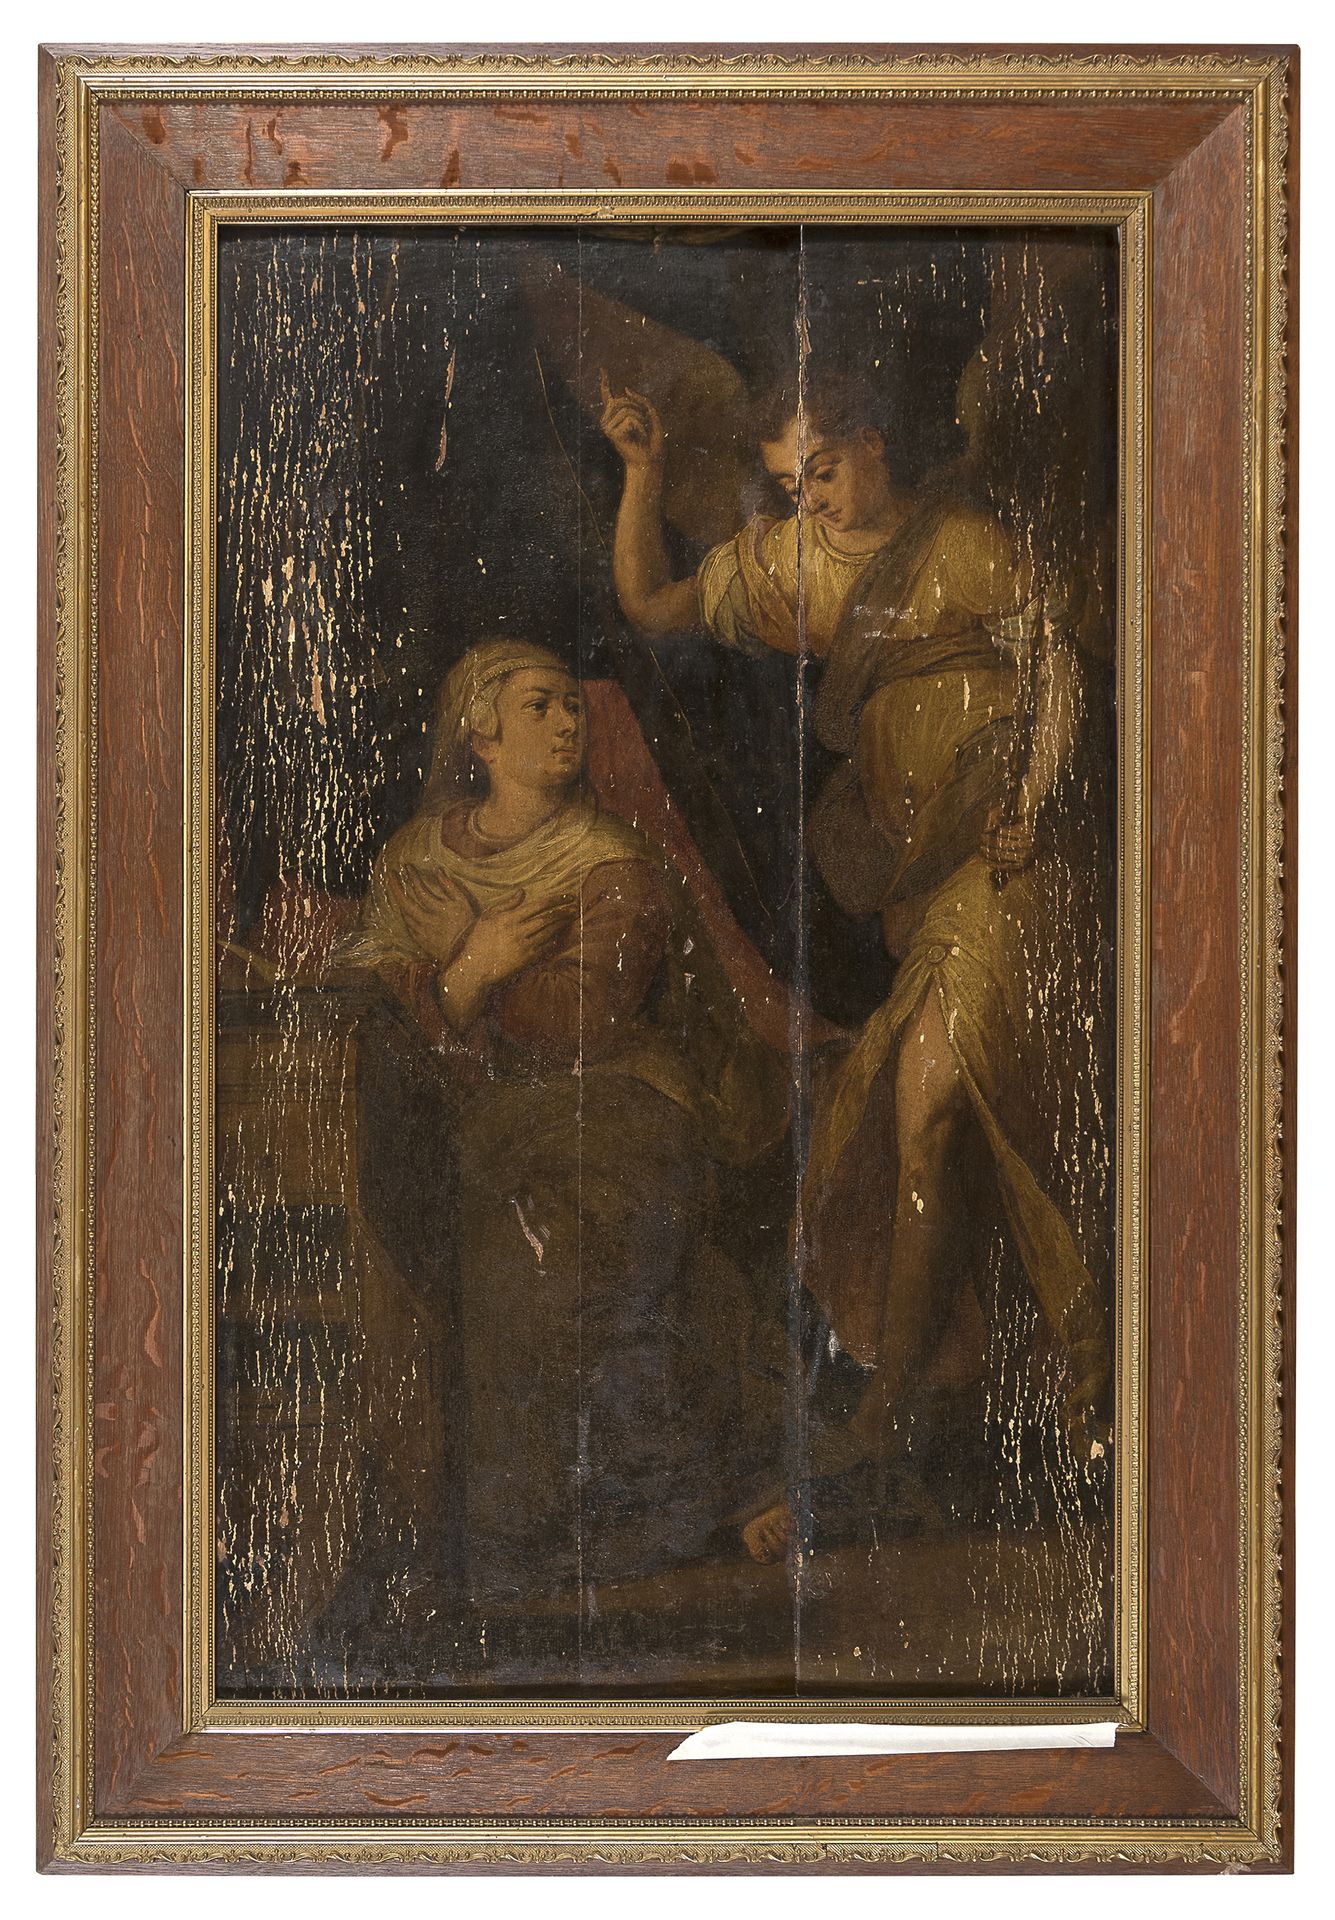 Null 风格派画家，16世纪下半叶



天使报喜

板上油画，93 x 56厘米



画作的状况

木板上有三个部分的垂直断裂。侧面有许多颜色的水滴


&hellip;